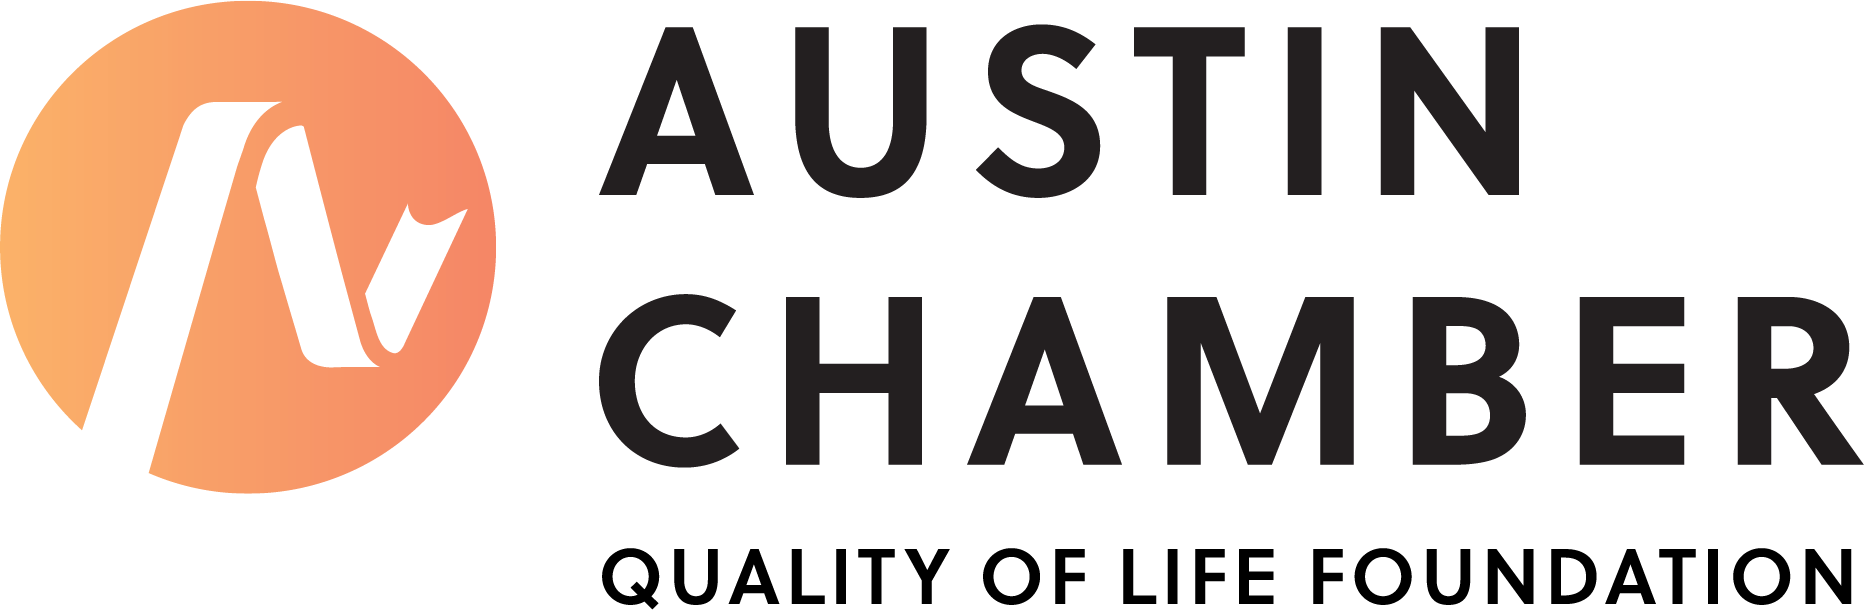 Quality of Life Foundation of Austin